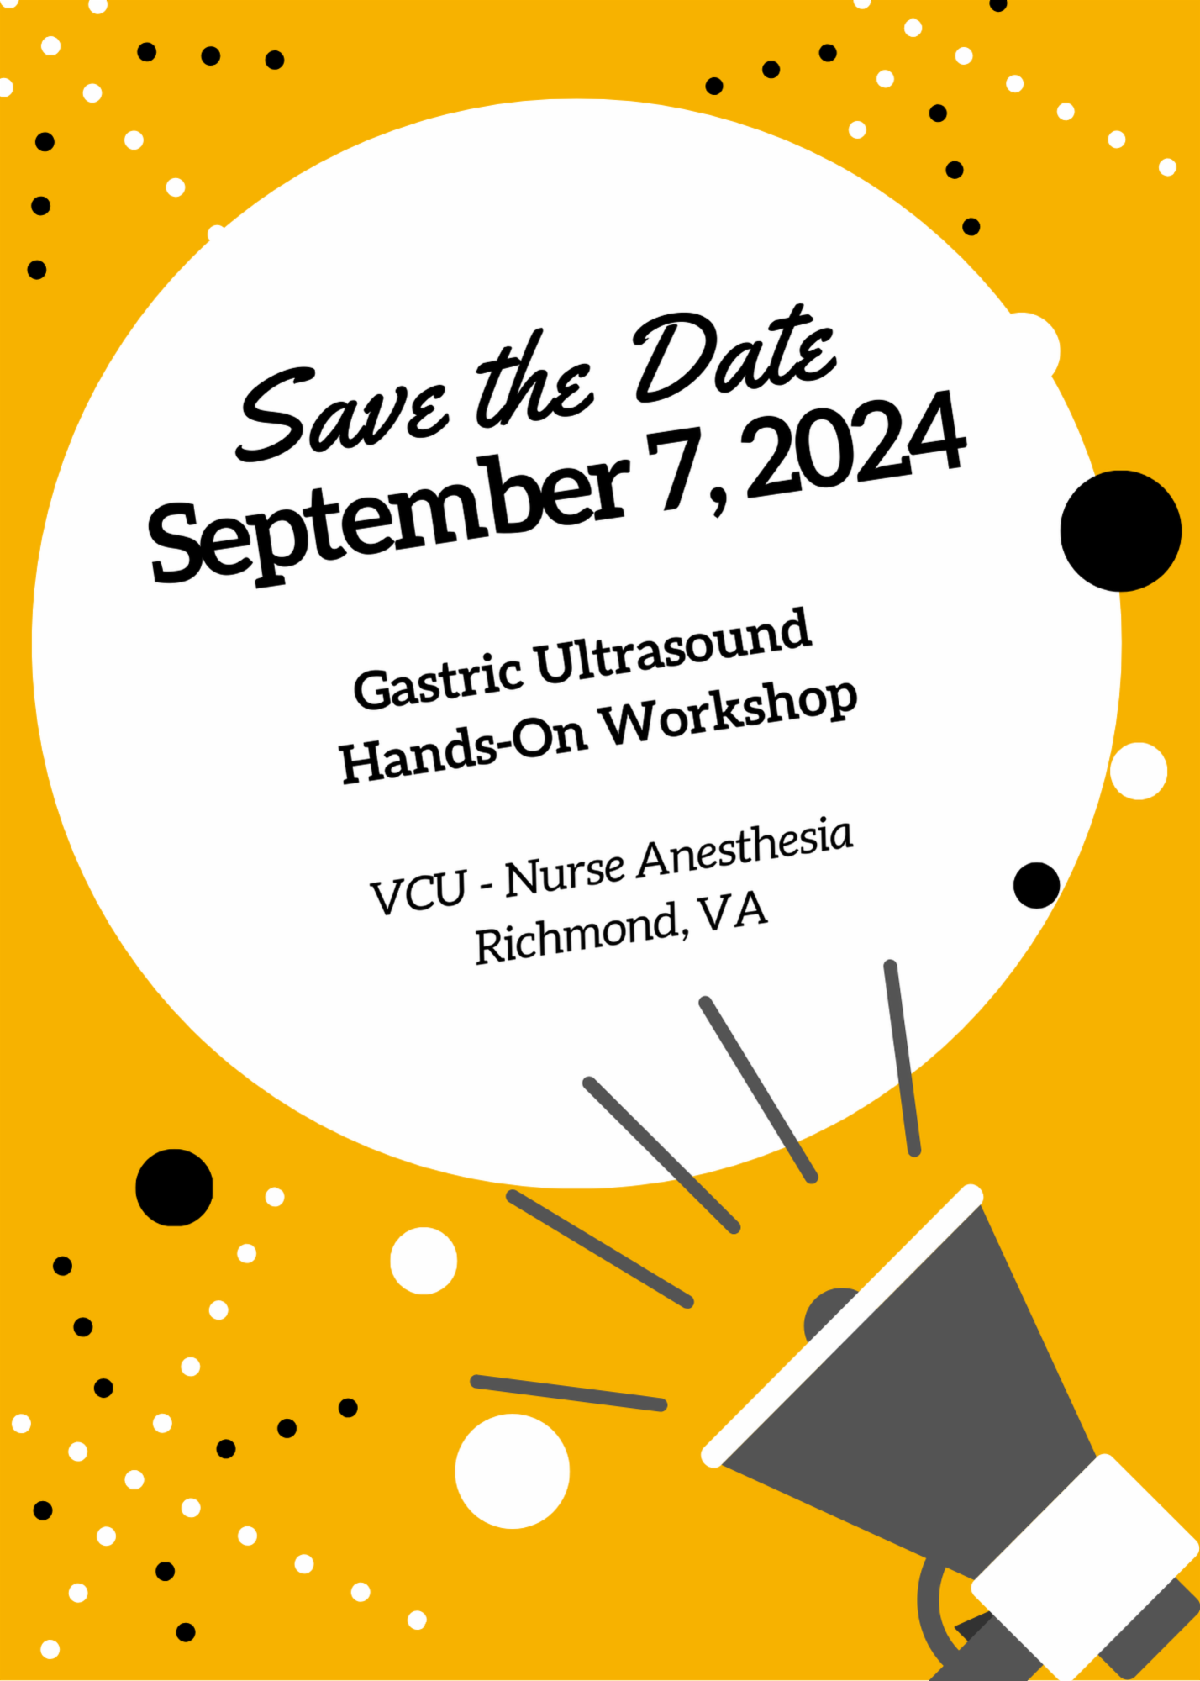 Save the Date Sept 7 2024 Gastric Ultrasound Hands On Workshop VCU Nurse Anesthesia Richmond VA